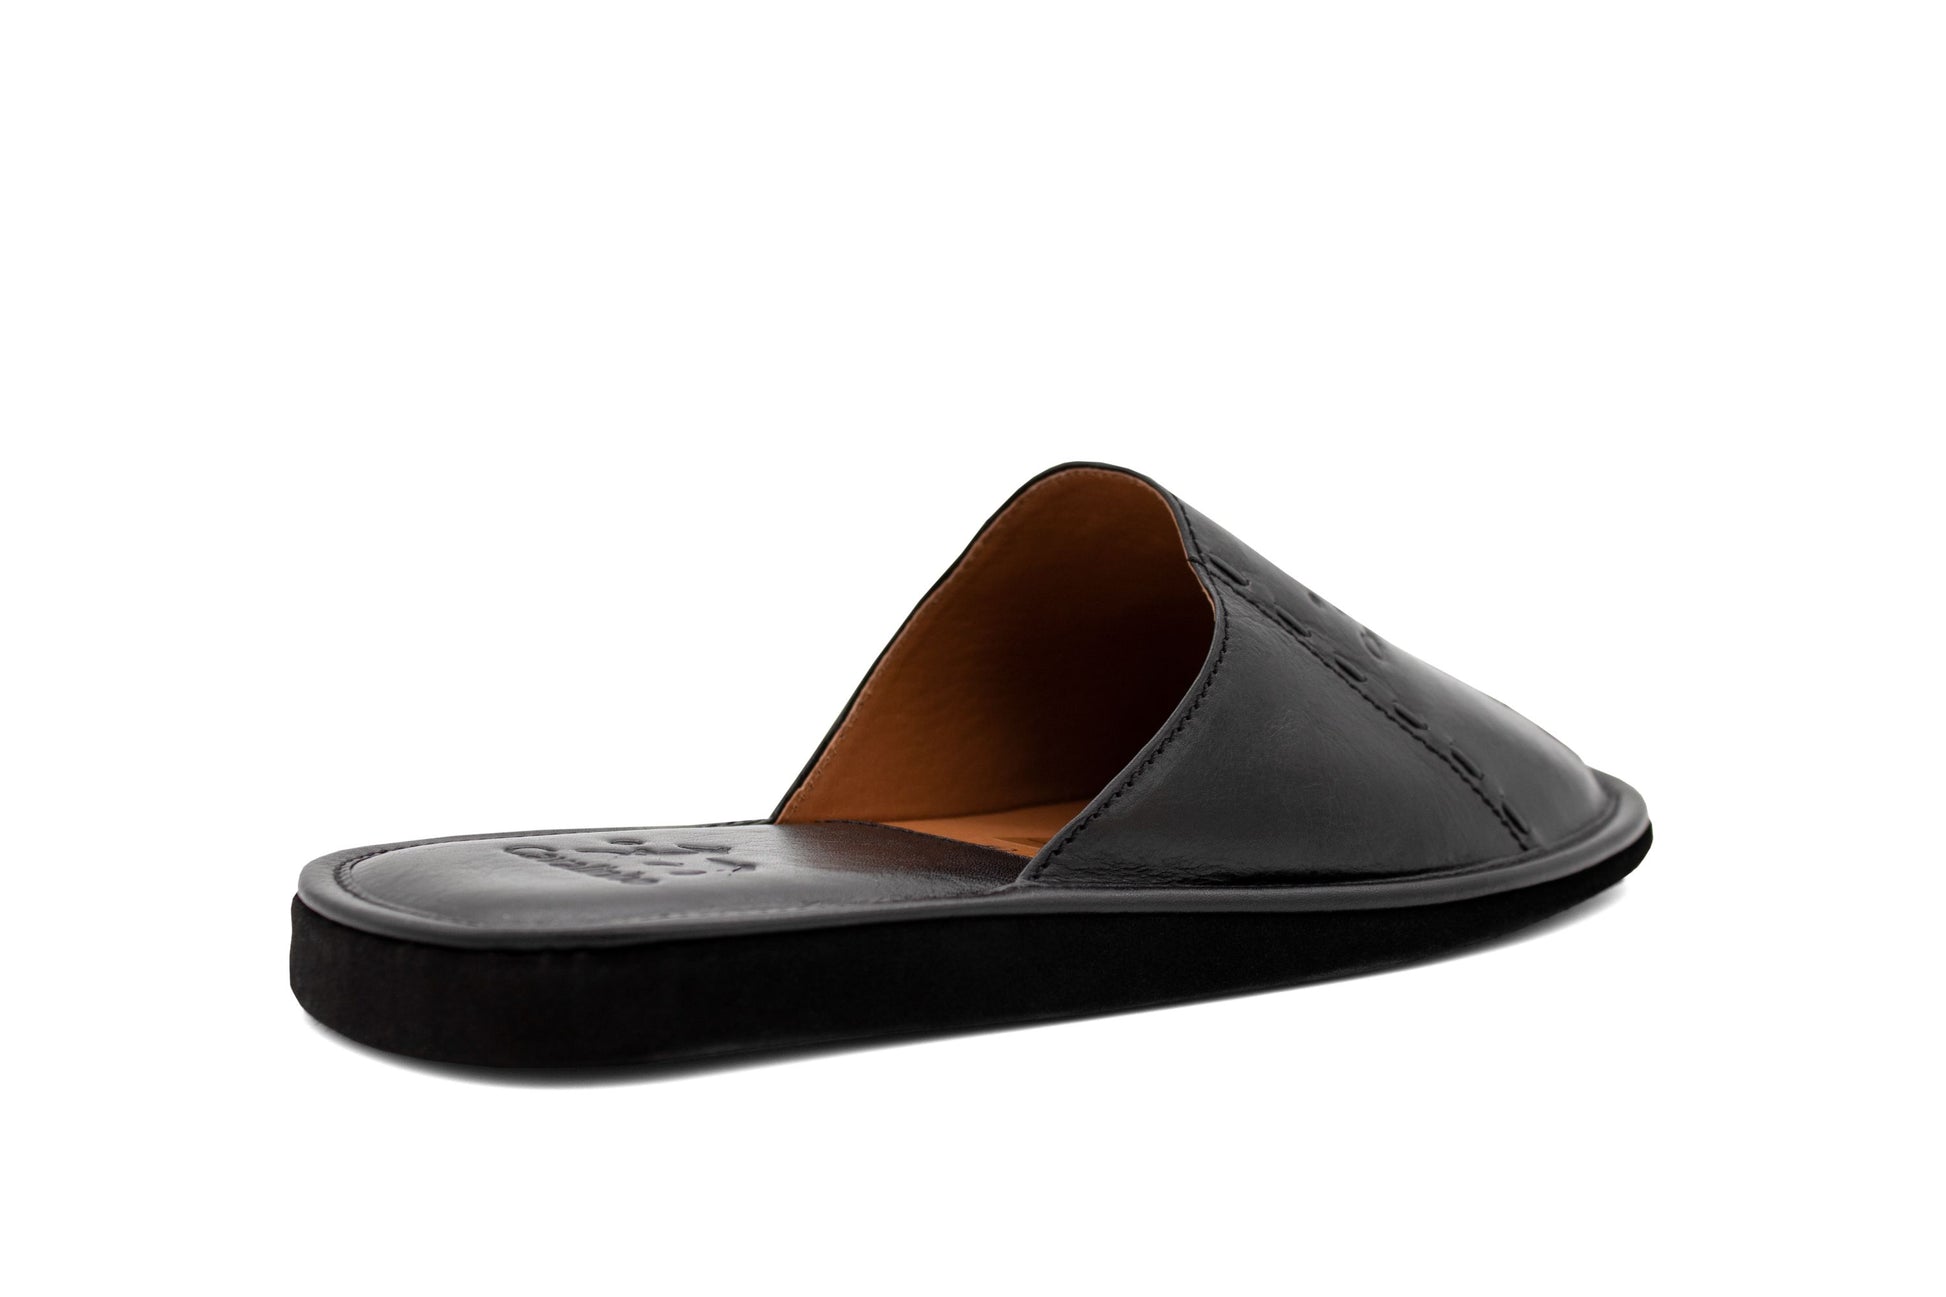 #color_ Black | Cavalinho Leather Slippers - Black - 48120101.01_3